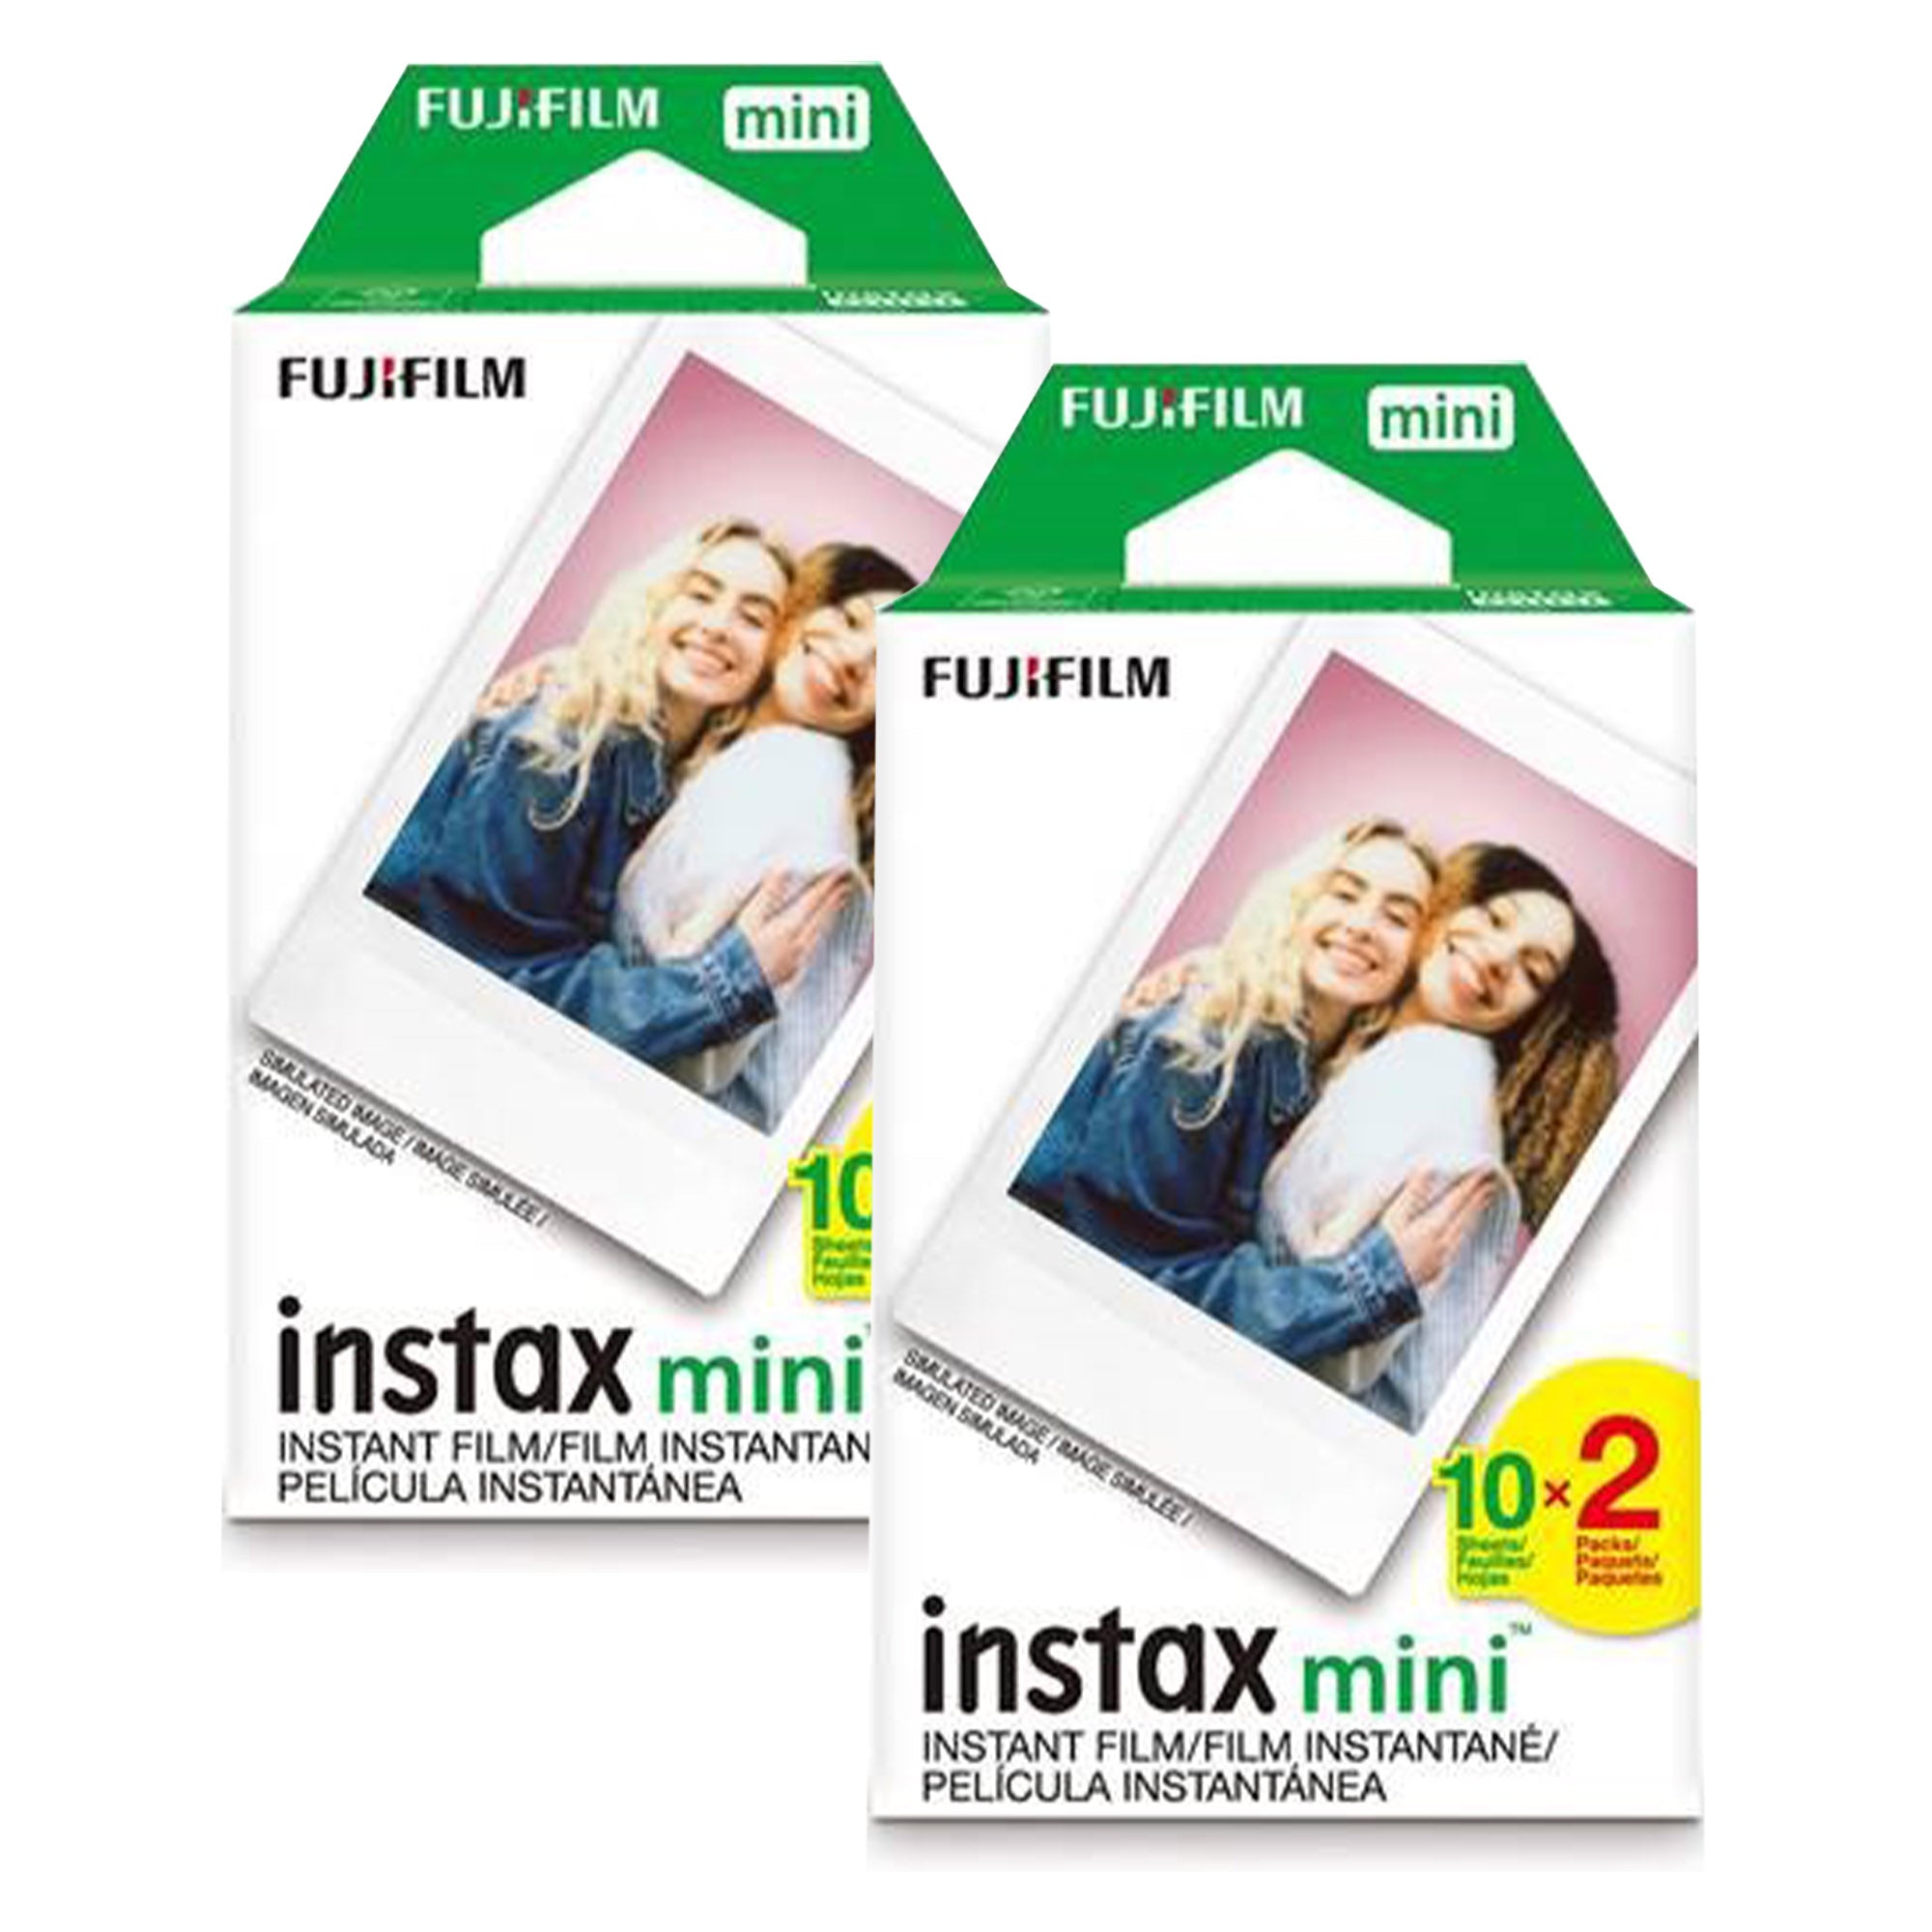 Fujifilm Instax Share SP-2 Smartphone Printer (Silver) + Mini Films (40 Shots)